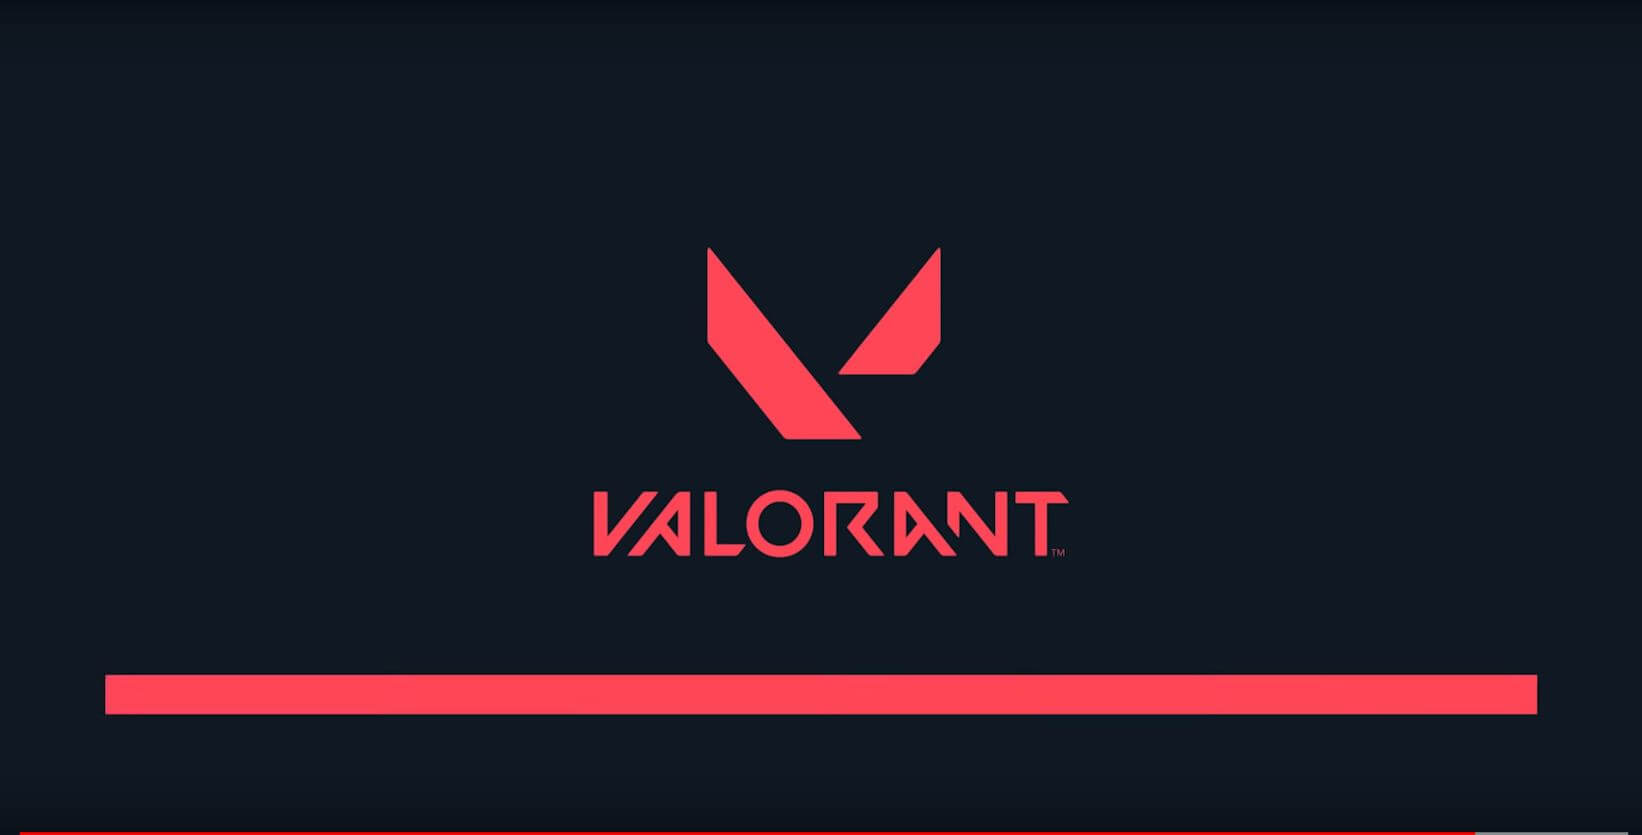 Valorant beta leaked on official Riot Games website - Battlechat